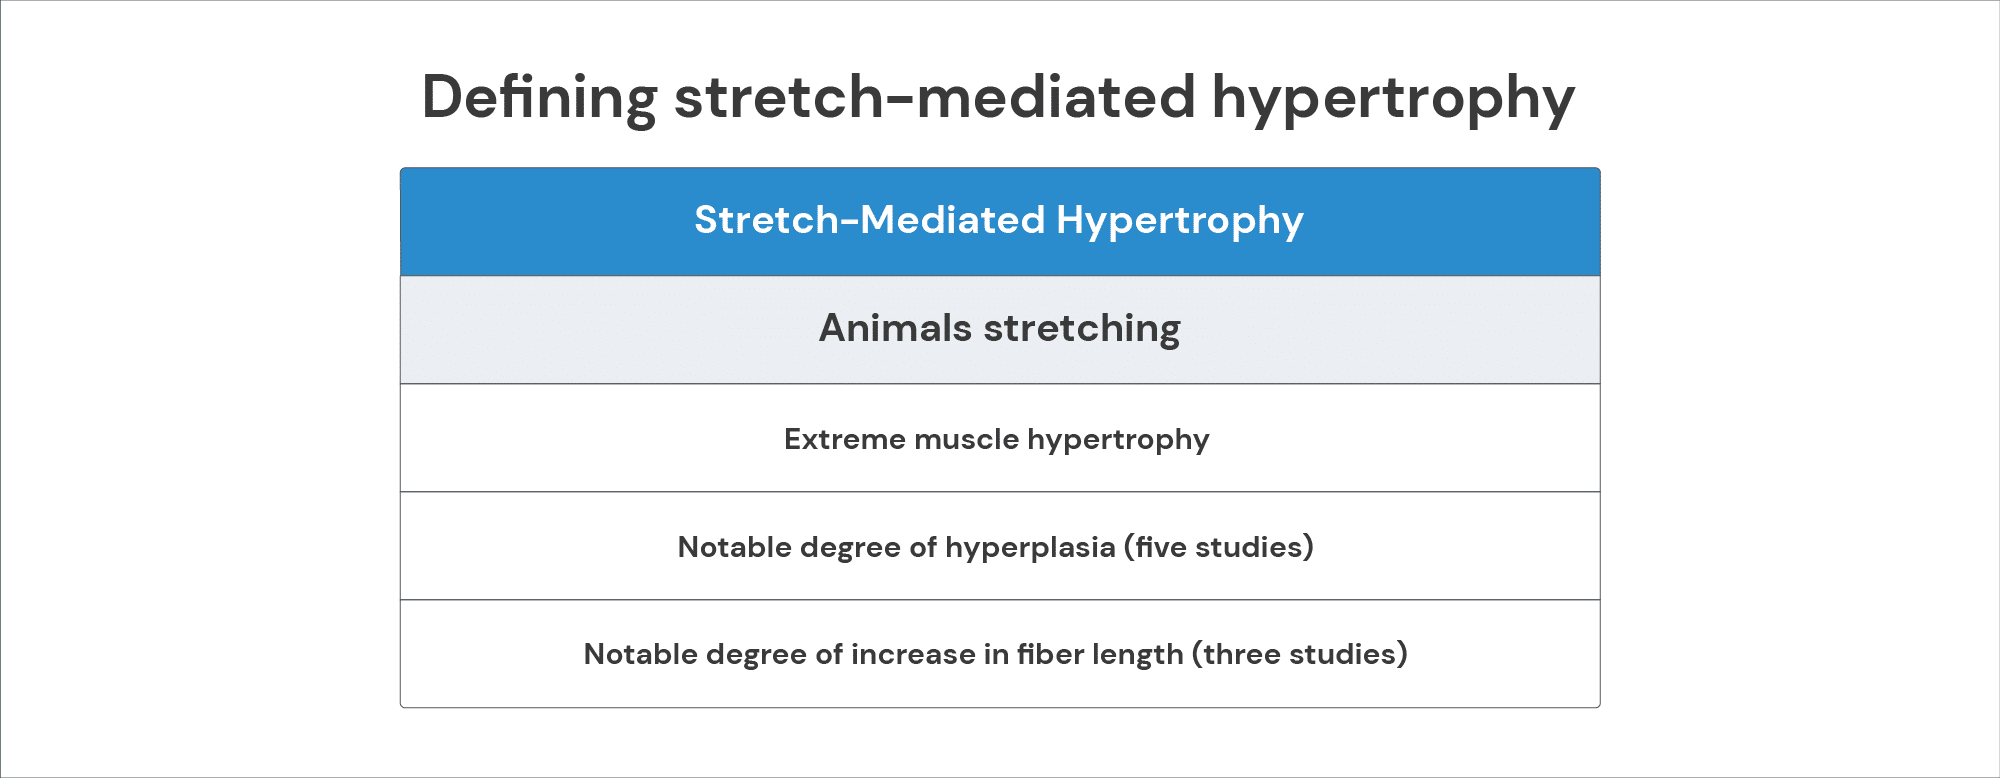 Defining stretch-mediated hypertrophy